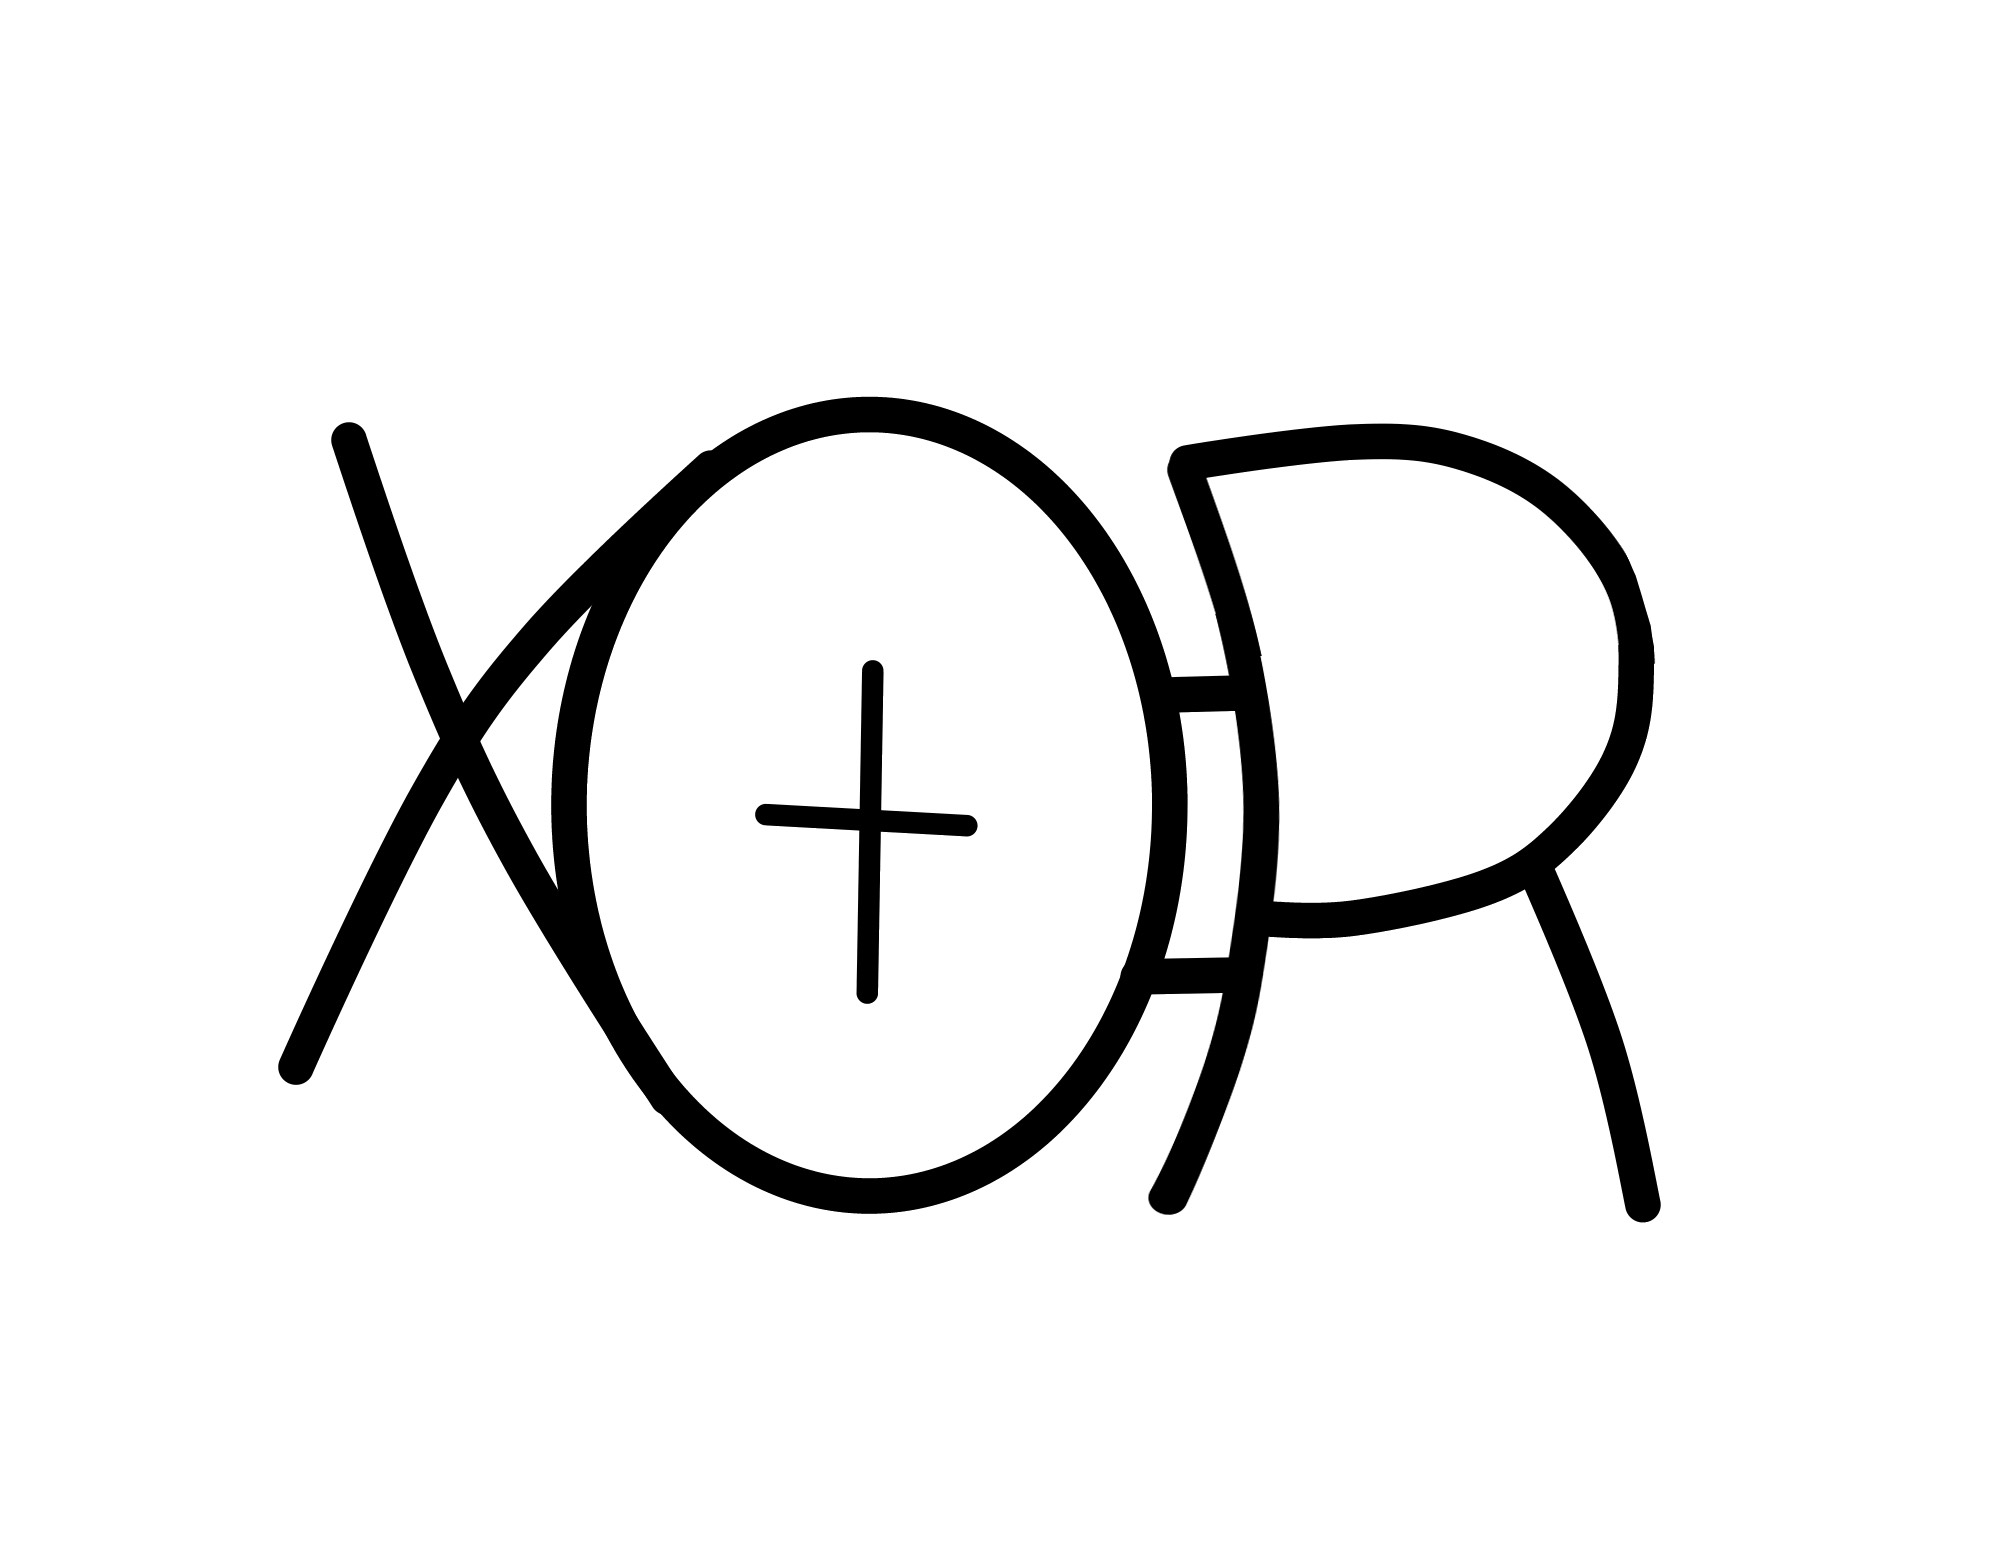 Logo for Xorsense, centered